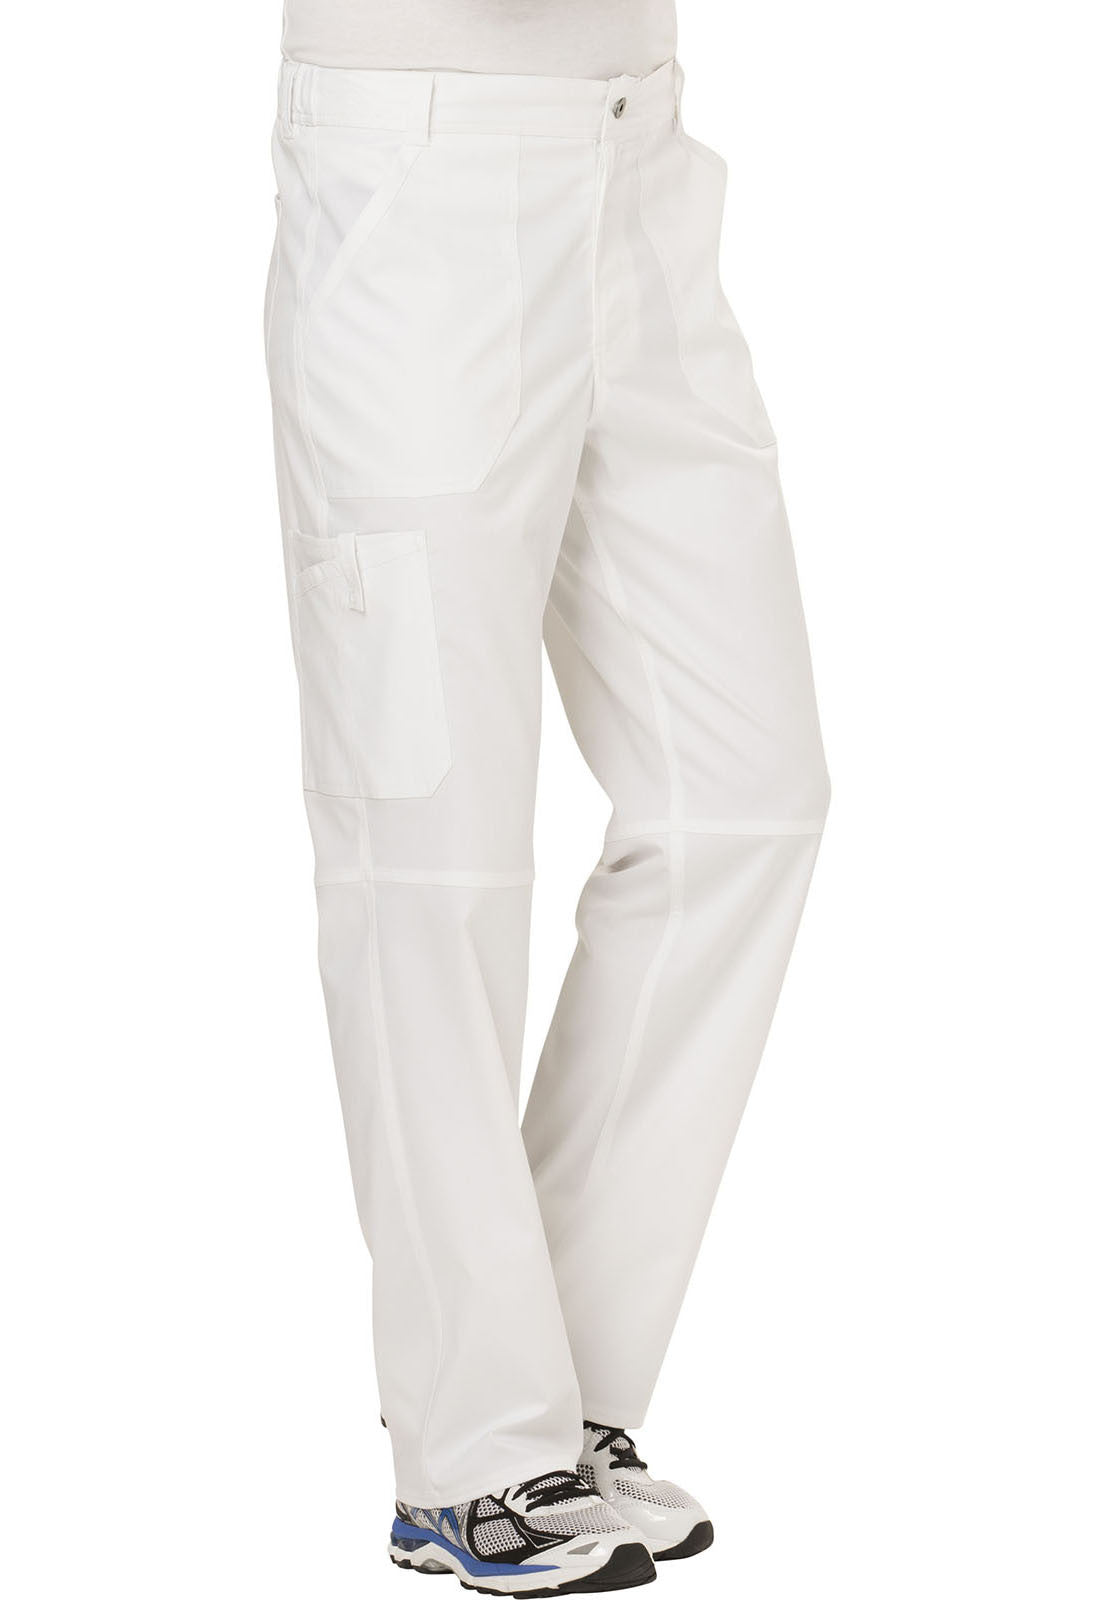 Nîmes - Pantalon slim taille haute - Homme - Cherokee Cherokee Authentic Workwear